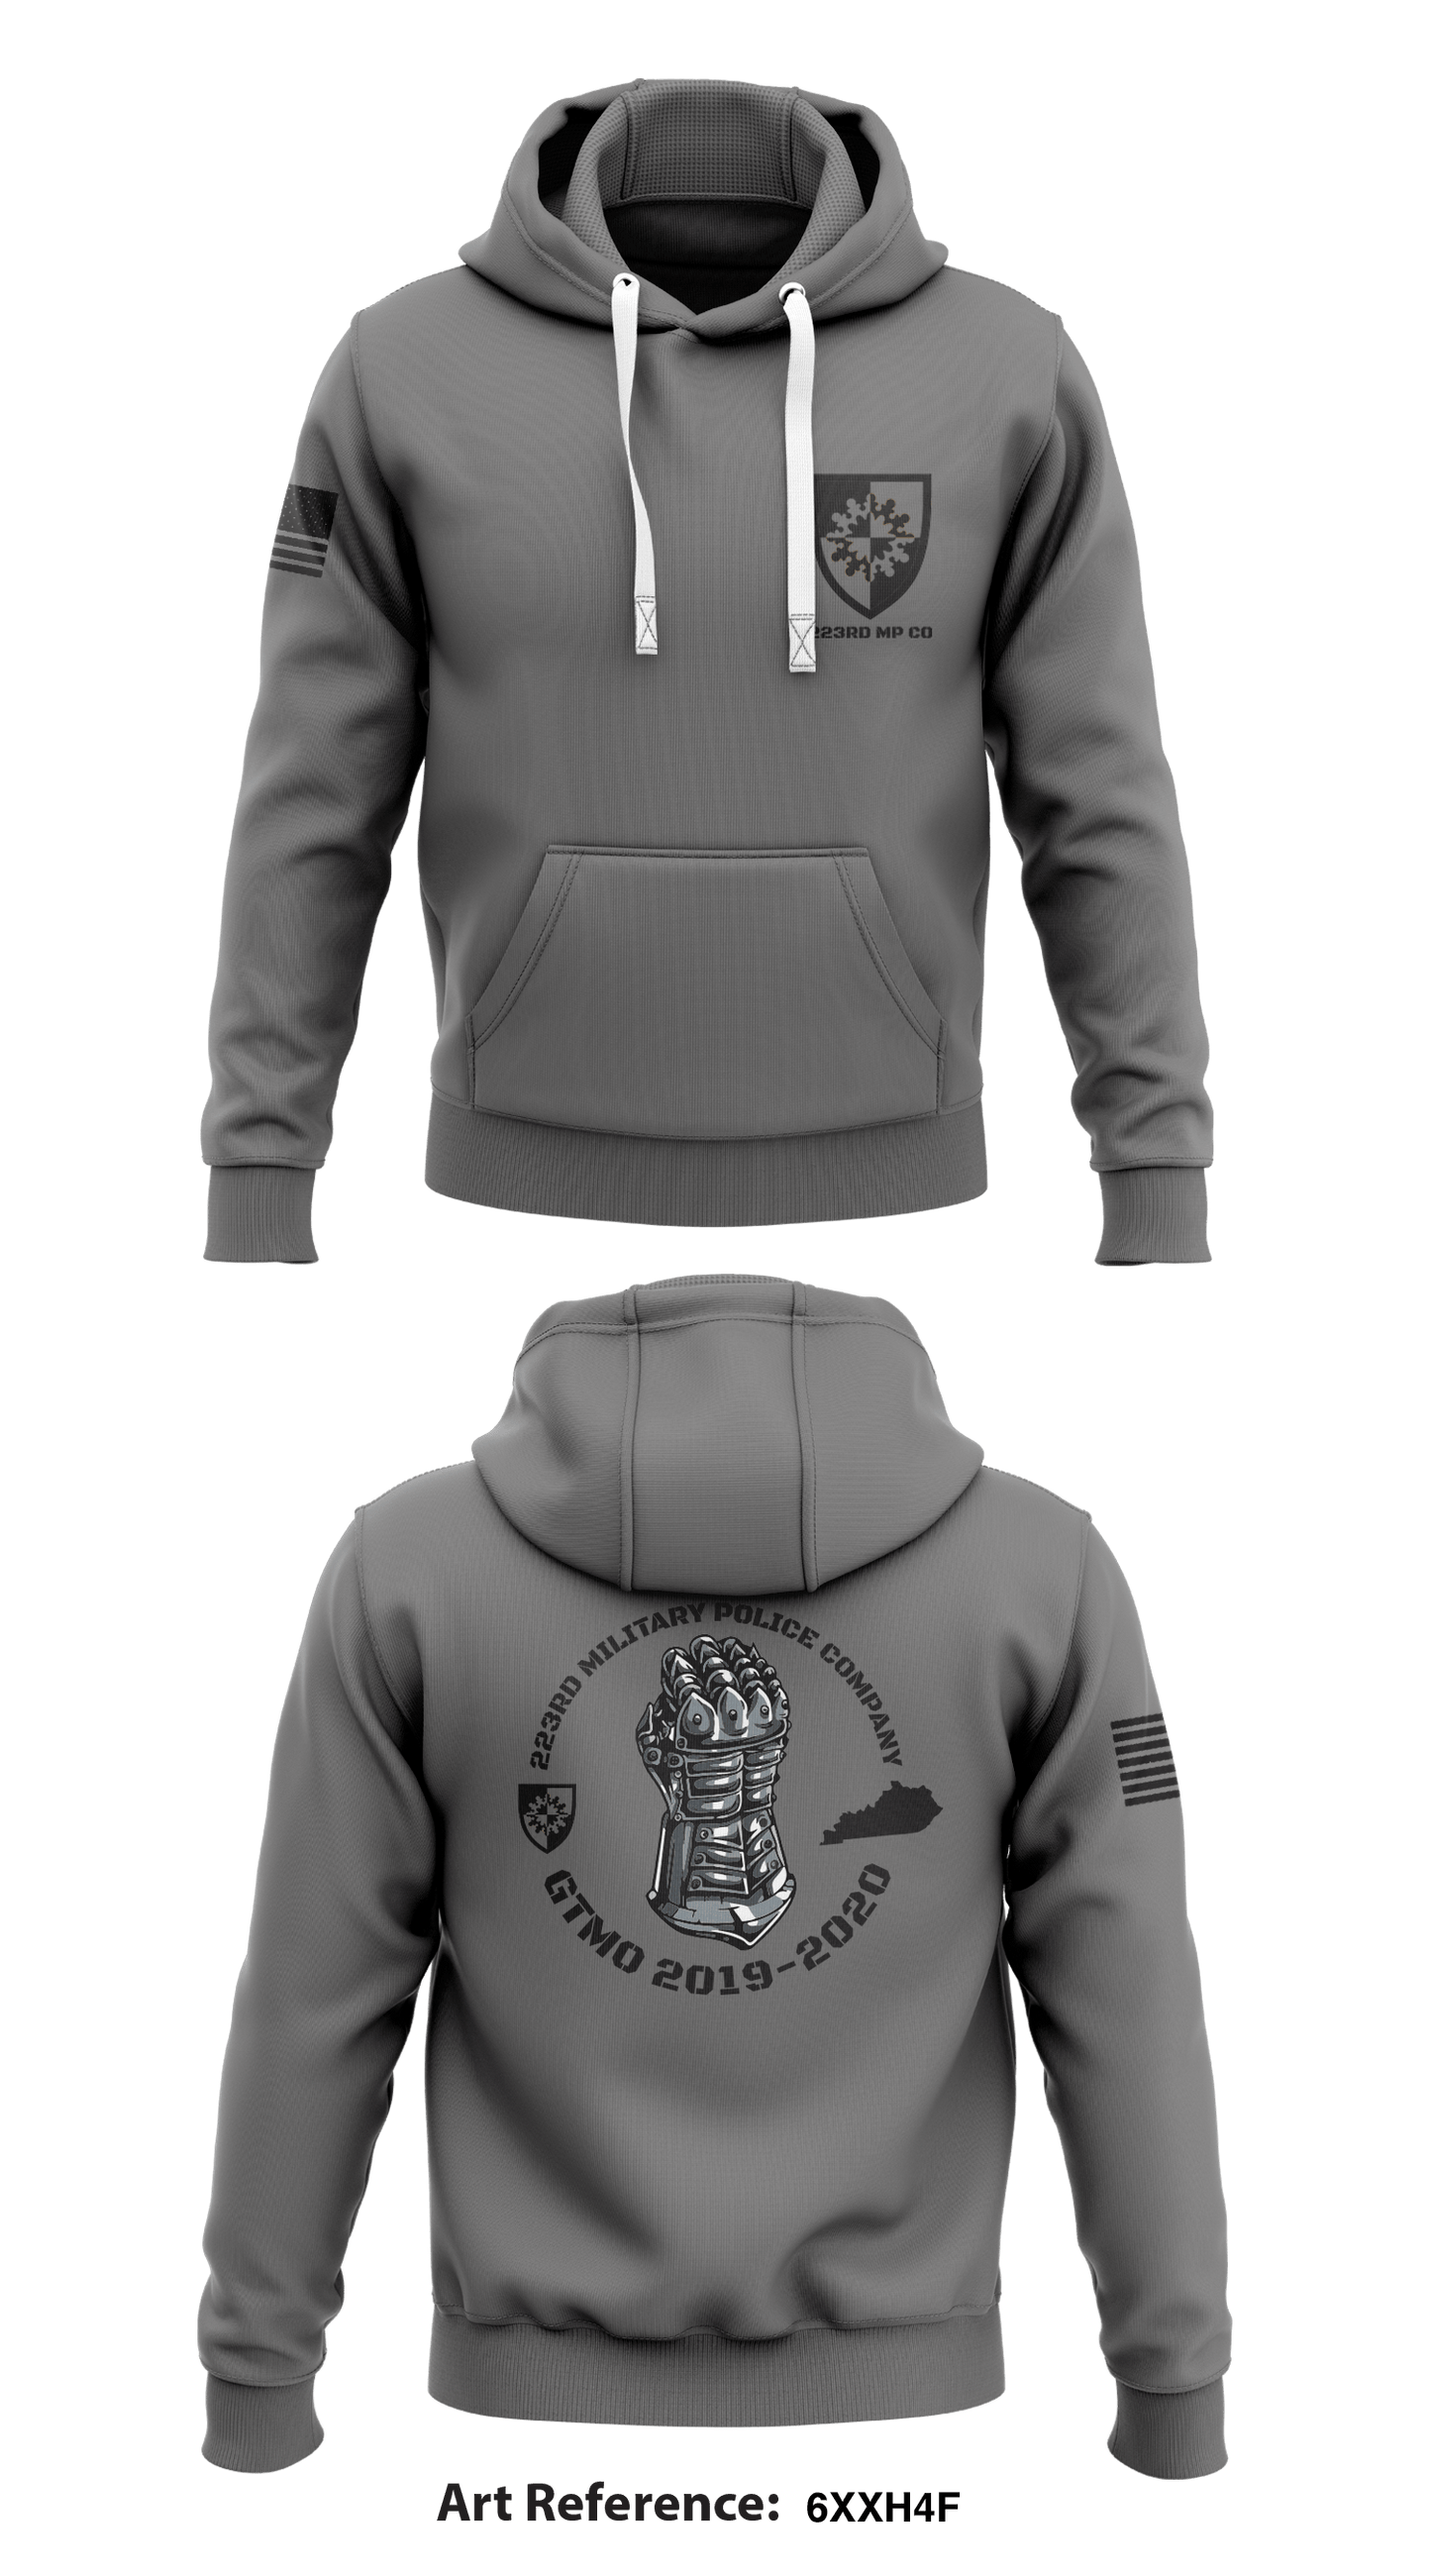 223rd Military Police Company Store 1  Core Men's Hooded Performance Sweatshirt - 6xXh4F